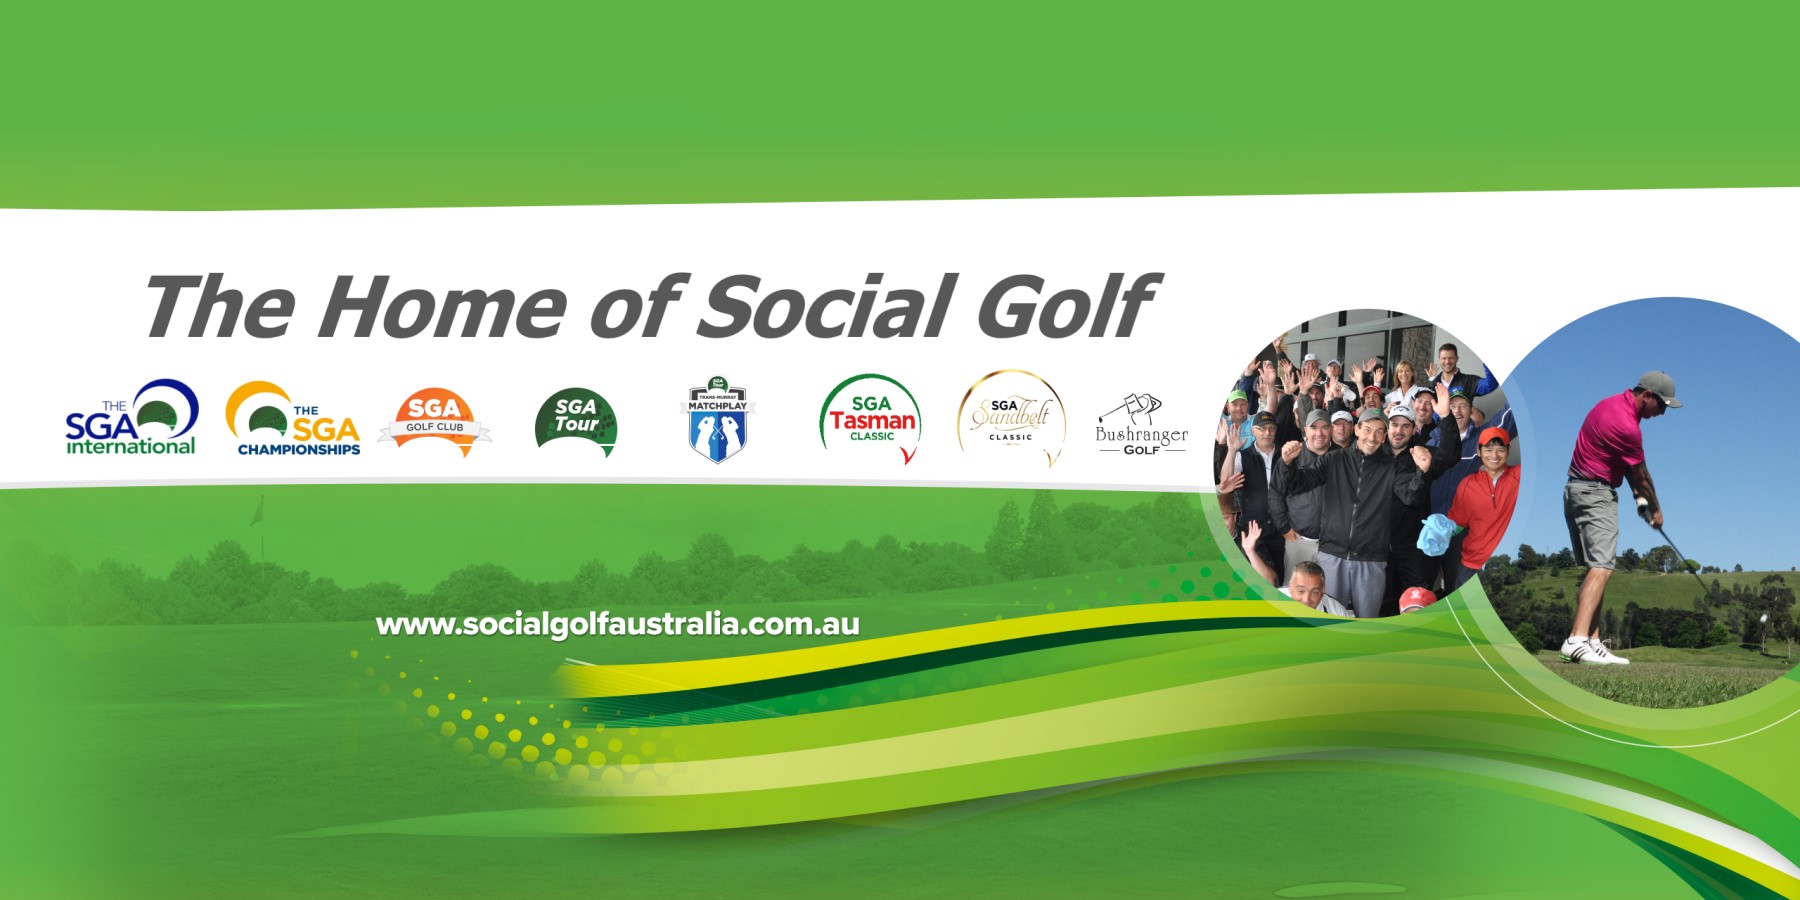 SGA - Australian Golf Handicap Provider and The Home of Social Golf